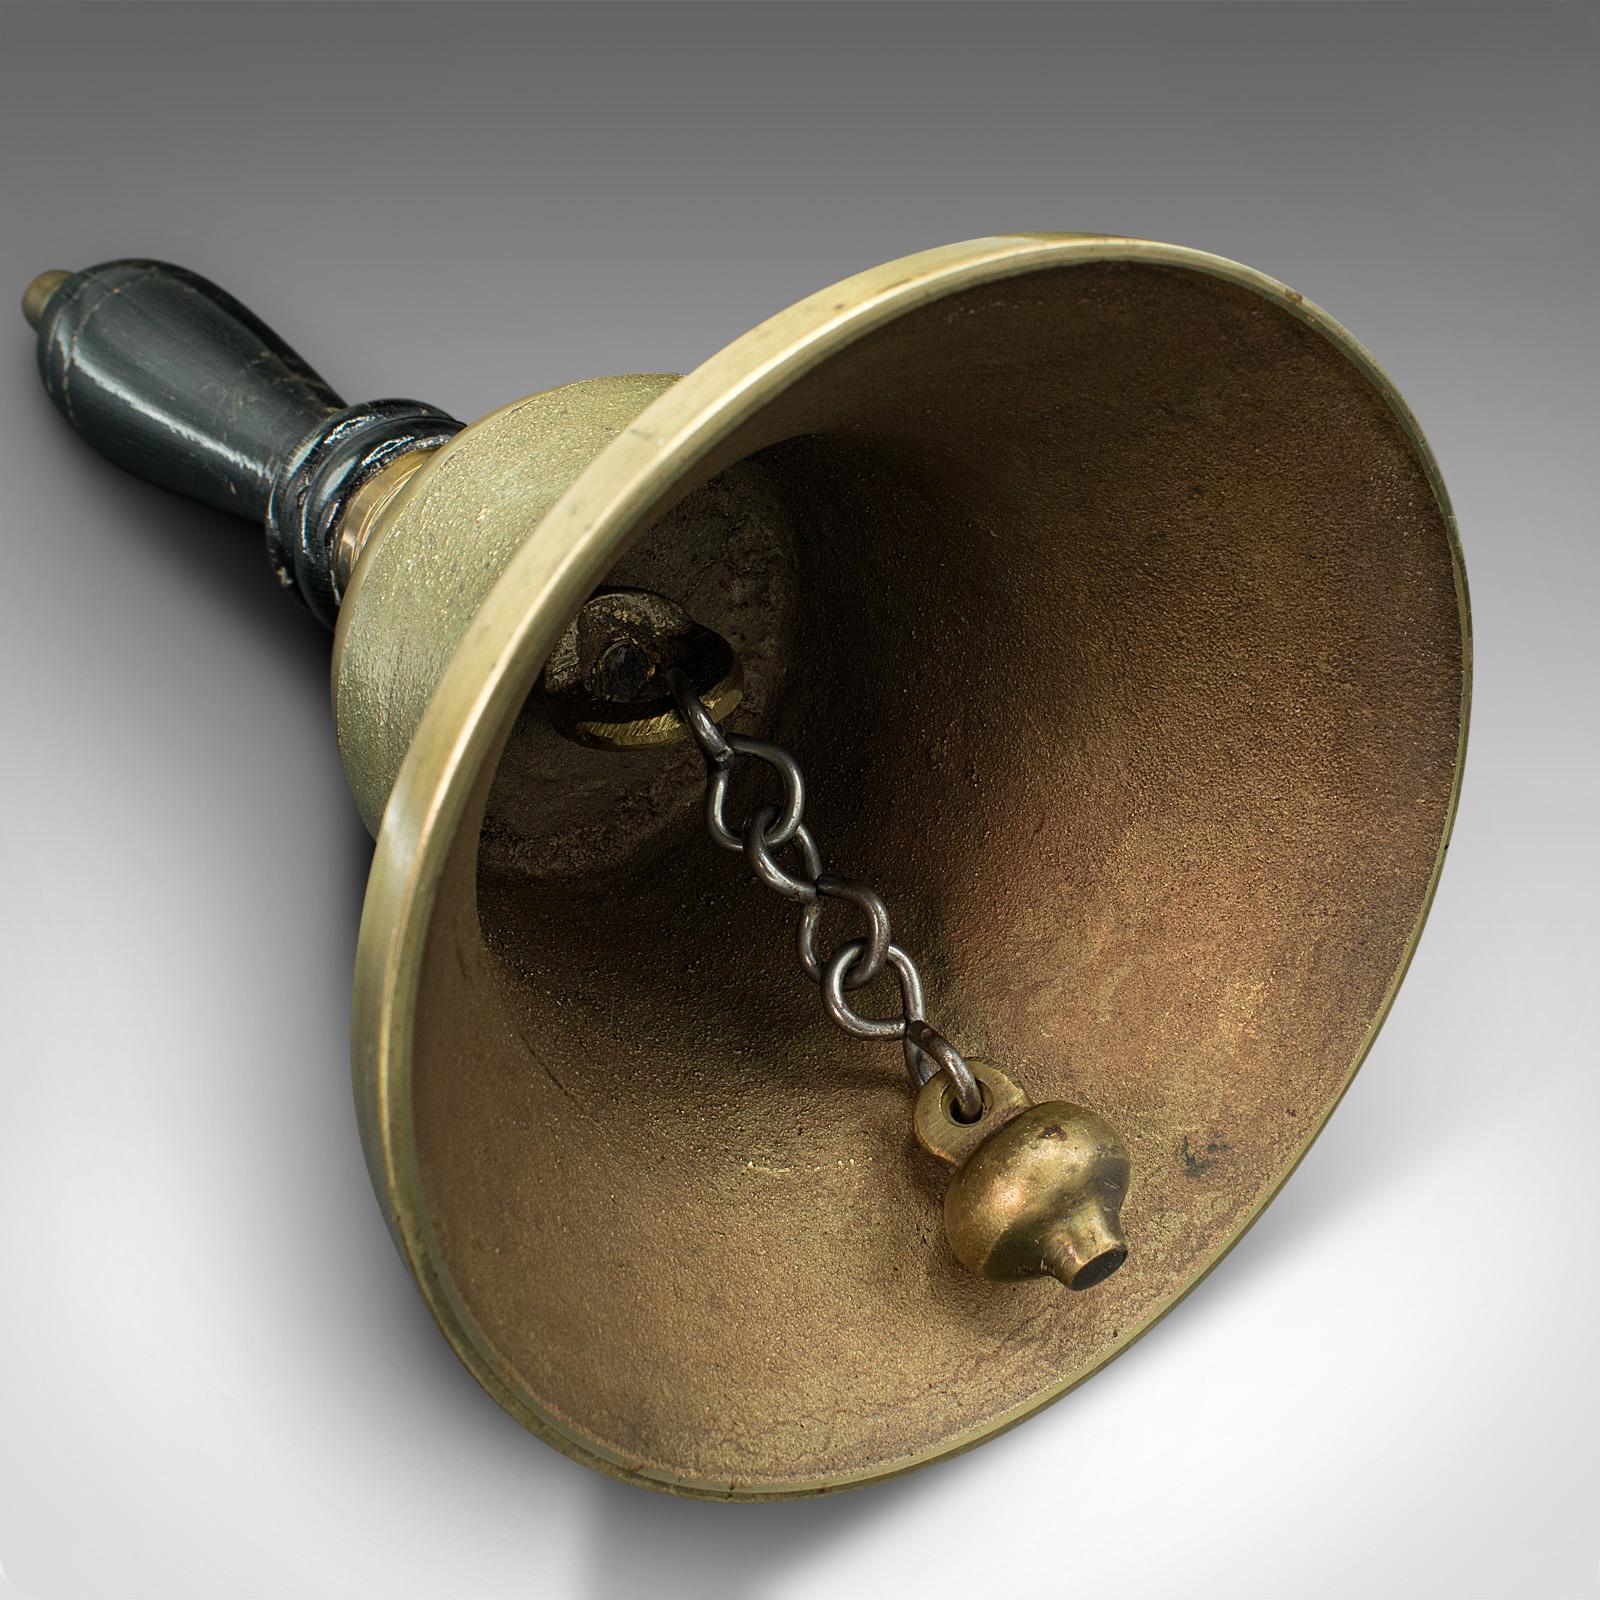 20th Century Antique Town Clerk's Hand Bell, English, Brass, School Yard Ringer, Edwardian